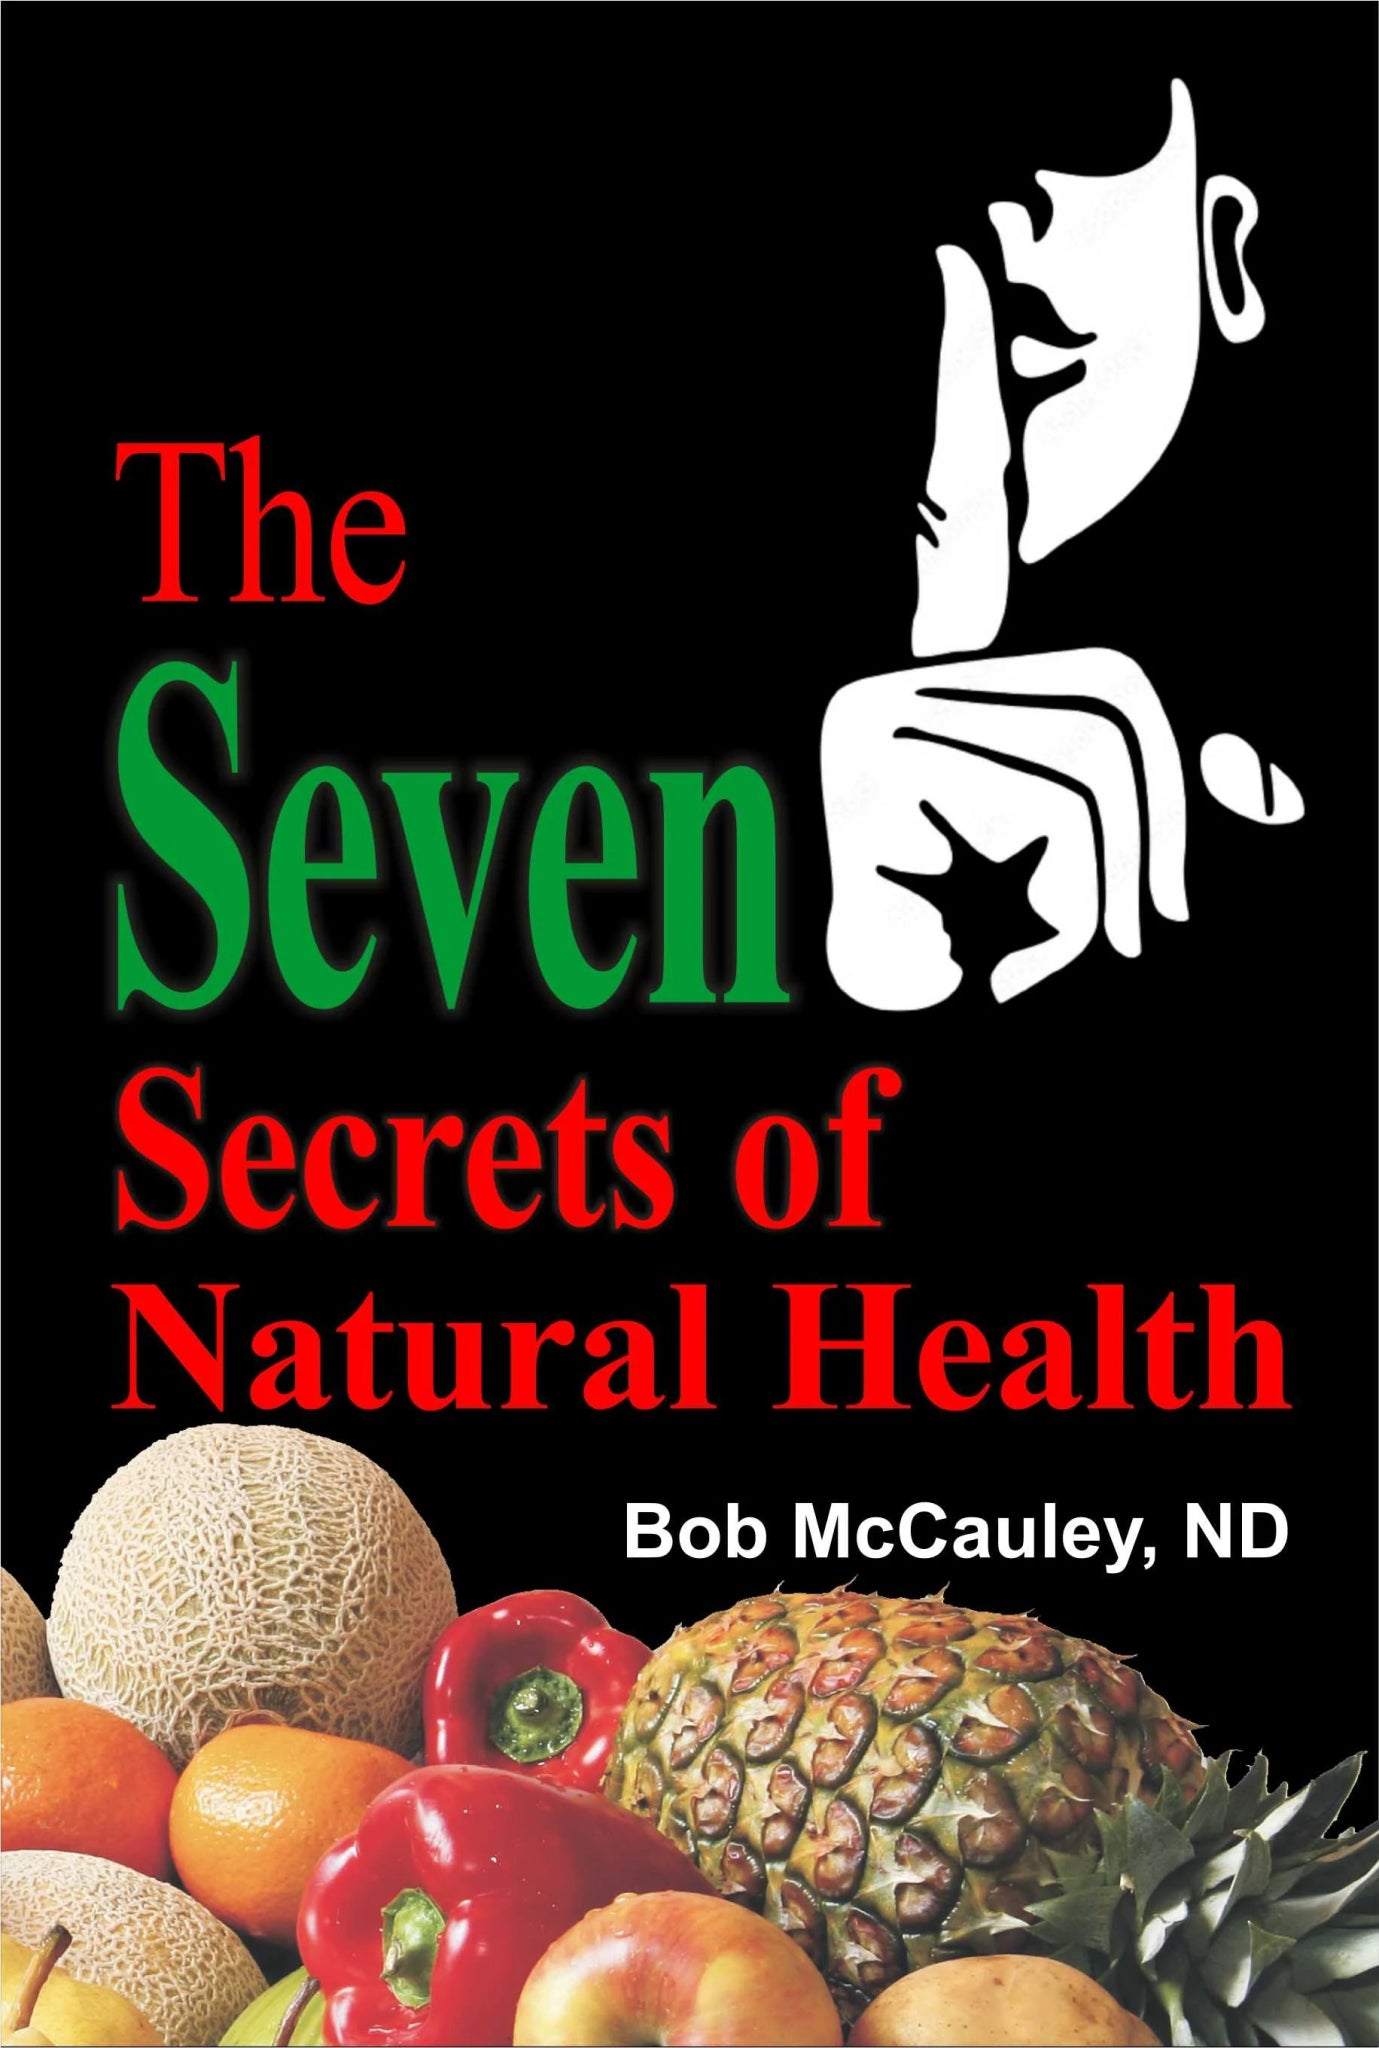 THE SEVEN SECRETS OF NATURAL HEALTH - Natural Zing